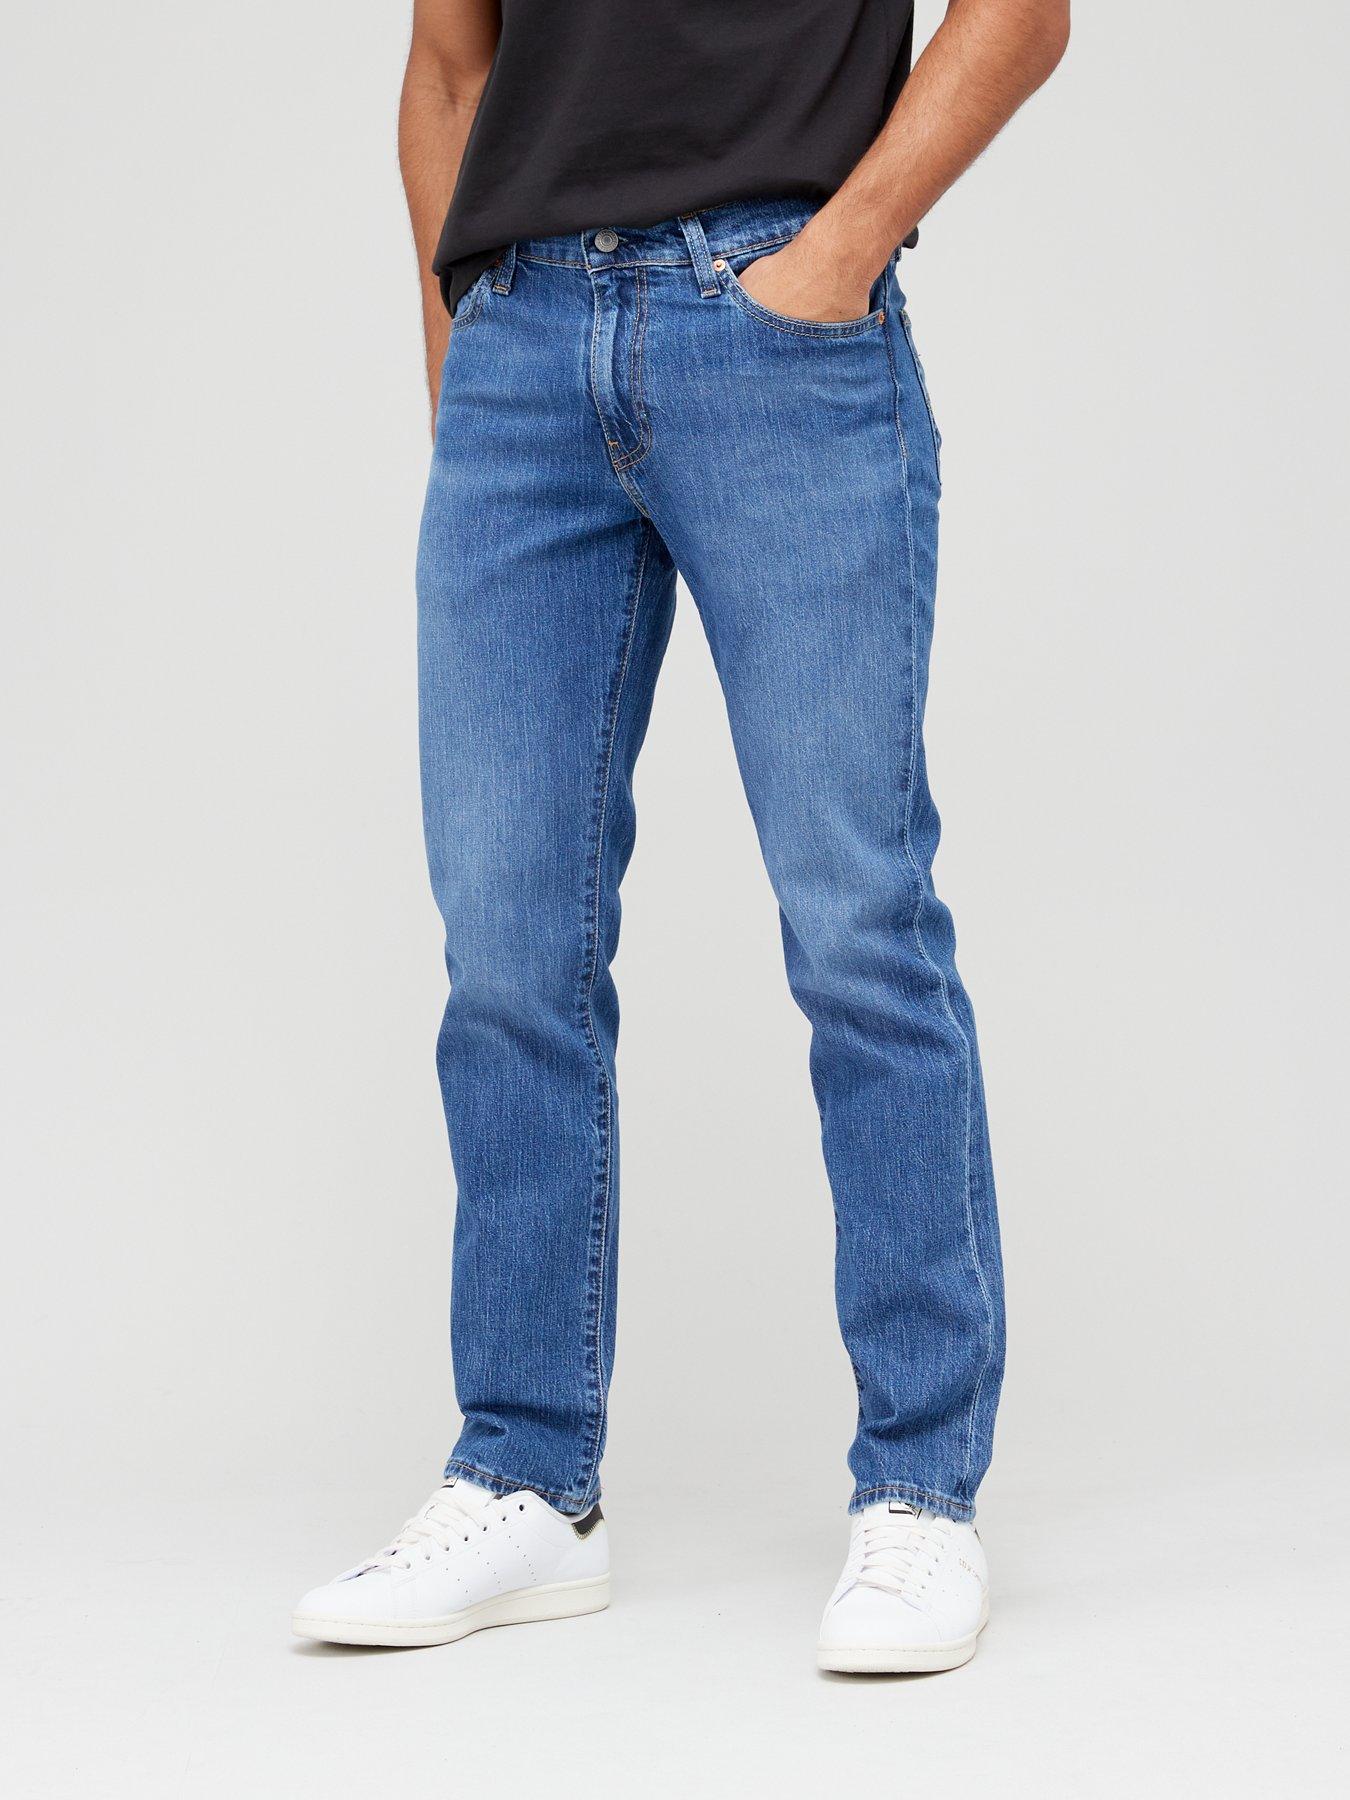 Levi's 511 Slim Fit Jeans - Mid Wash 